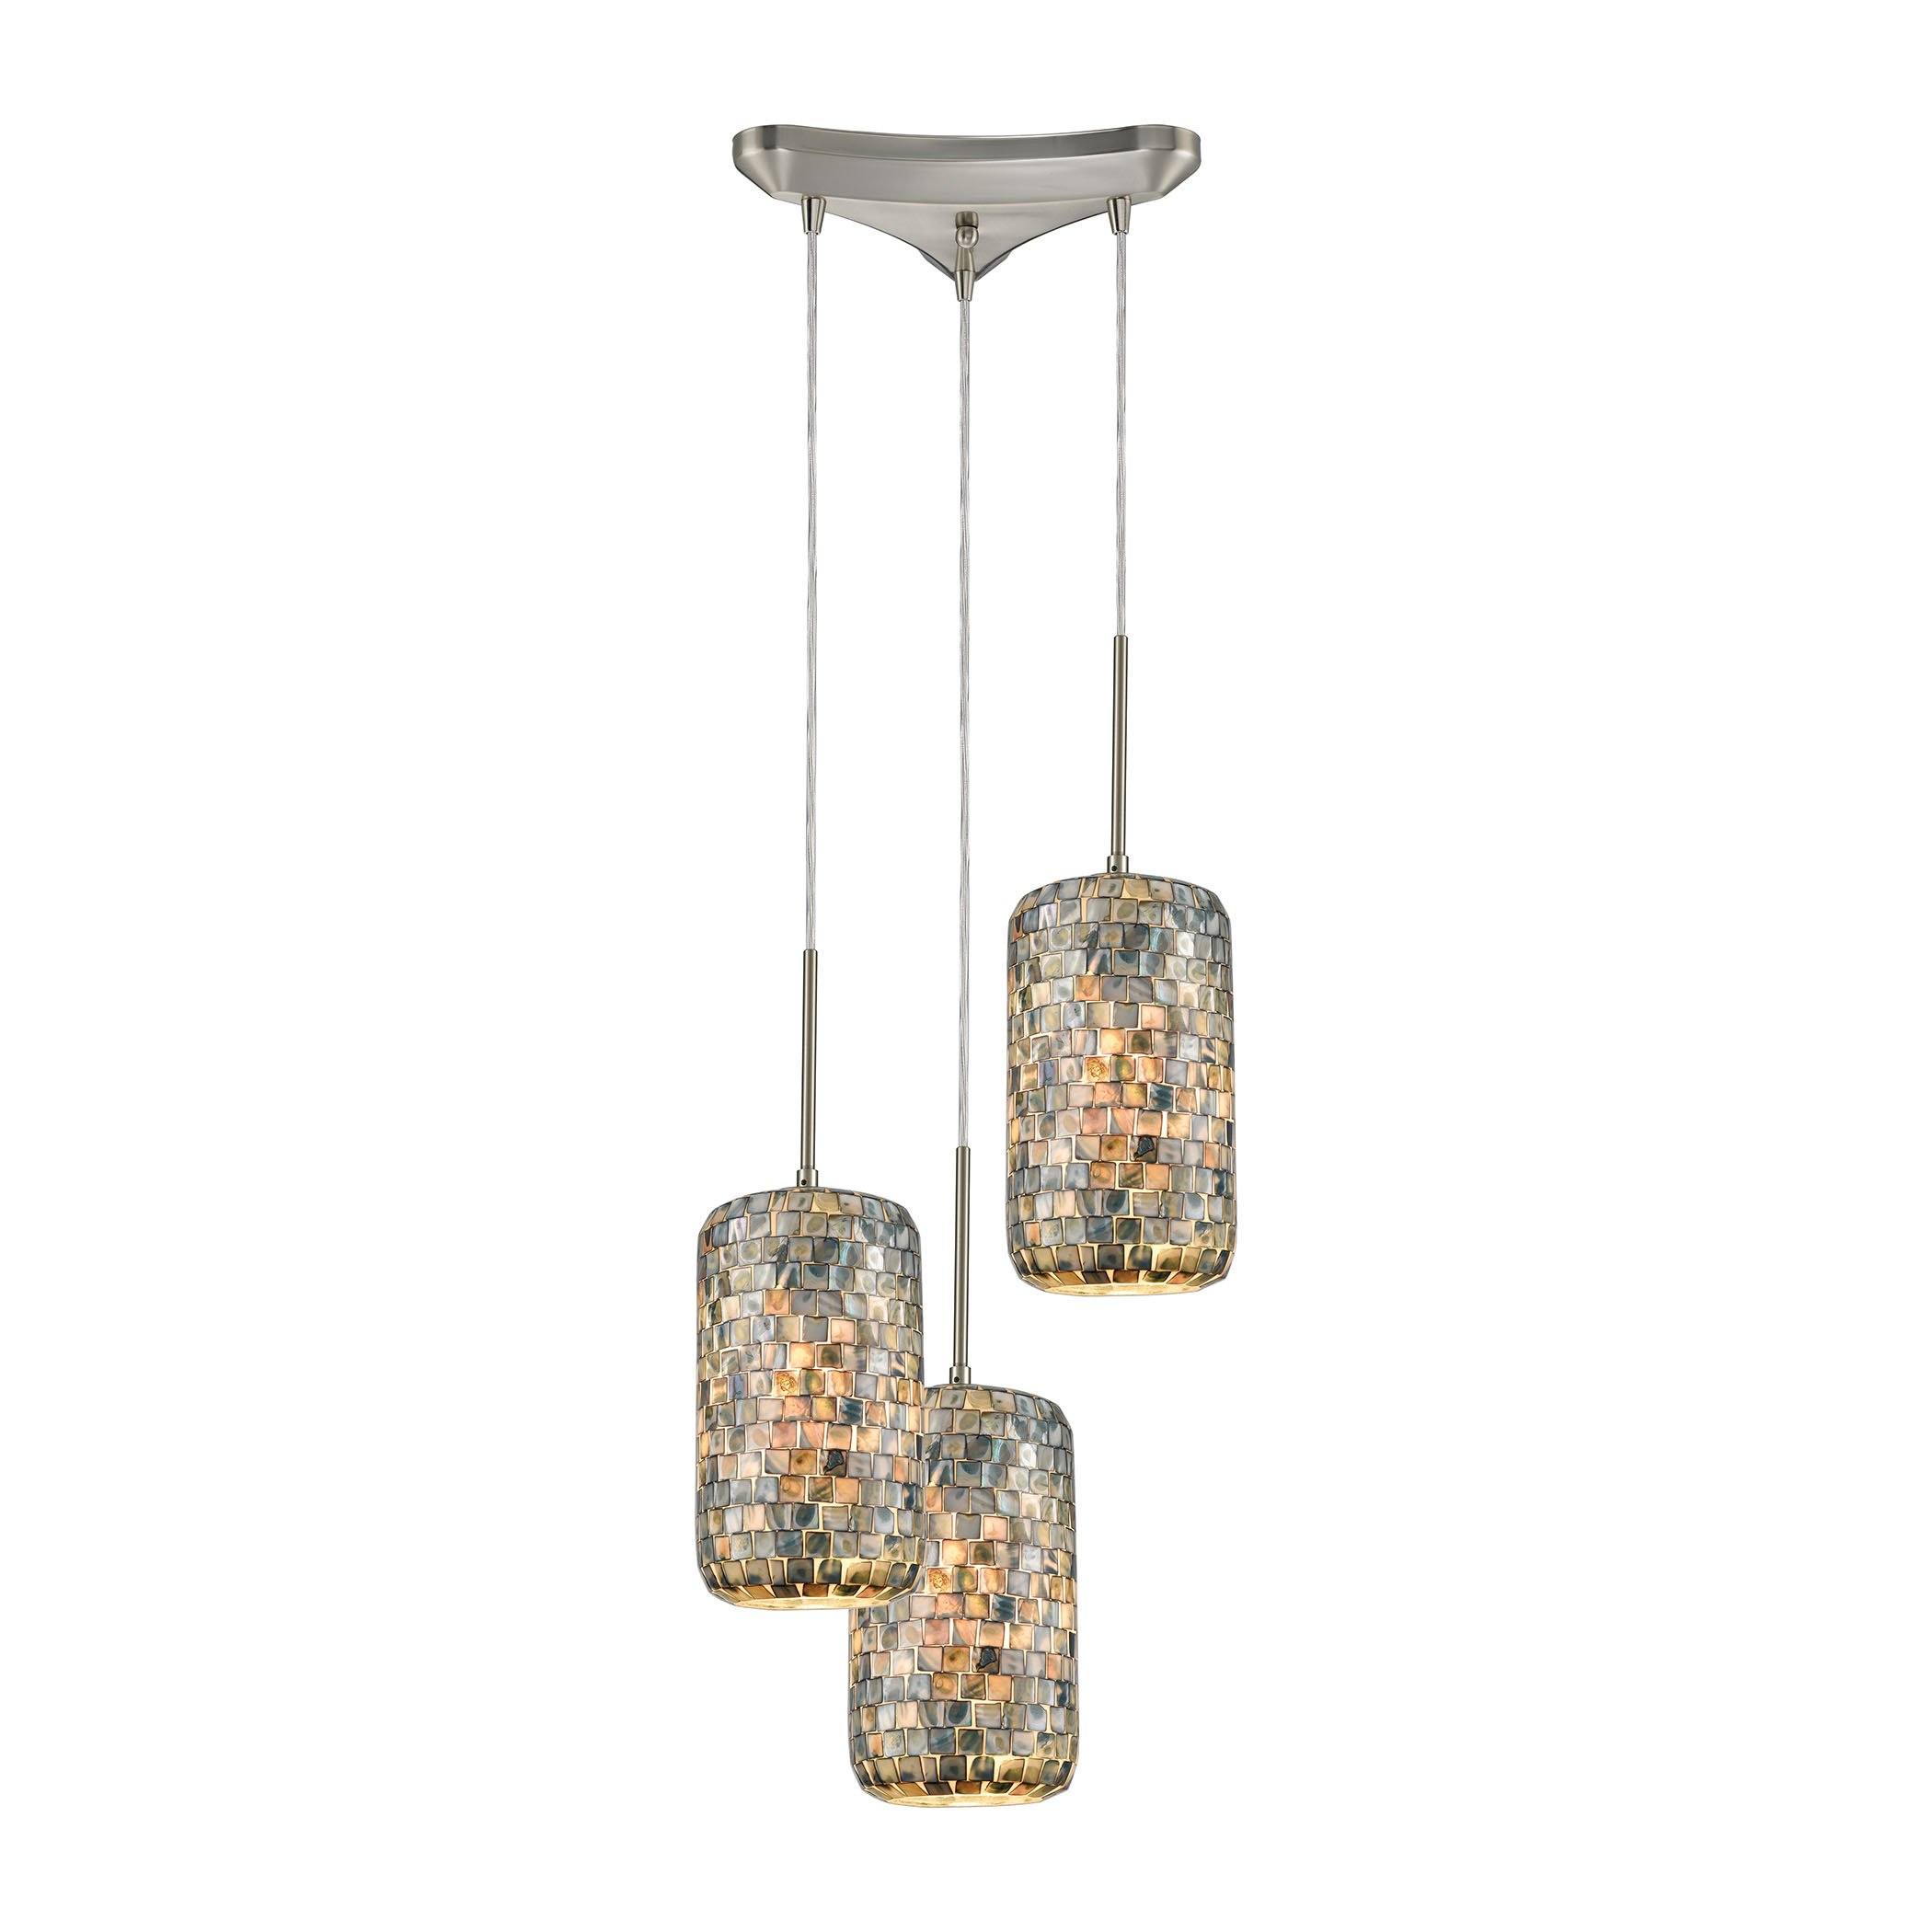 Capri 3-Light Pendant in Satin Nickel with Glass/Gray Capiz Shells Ceiling Elk Lighting 